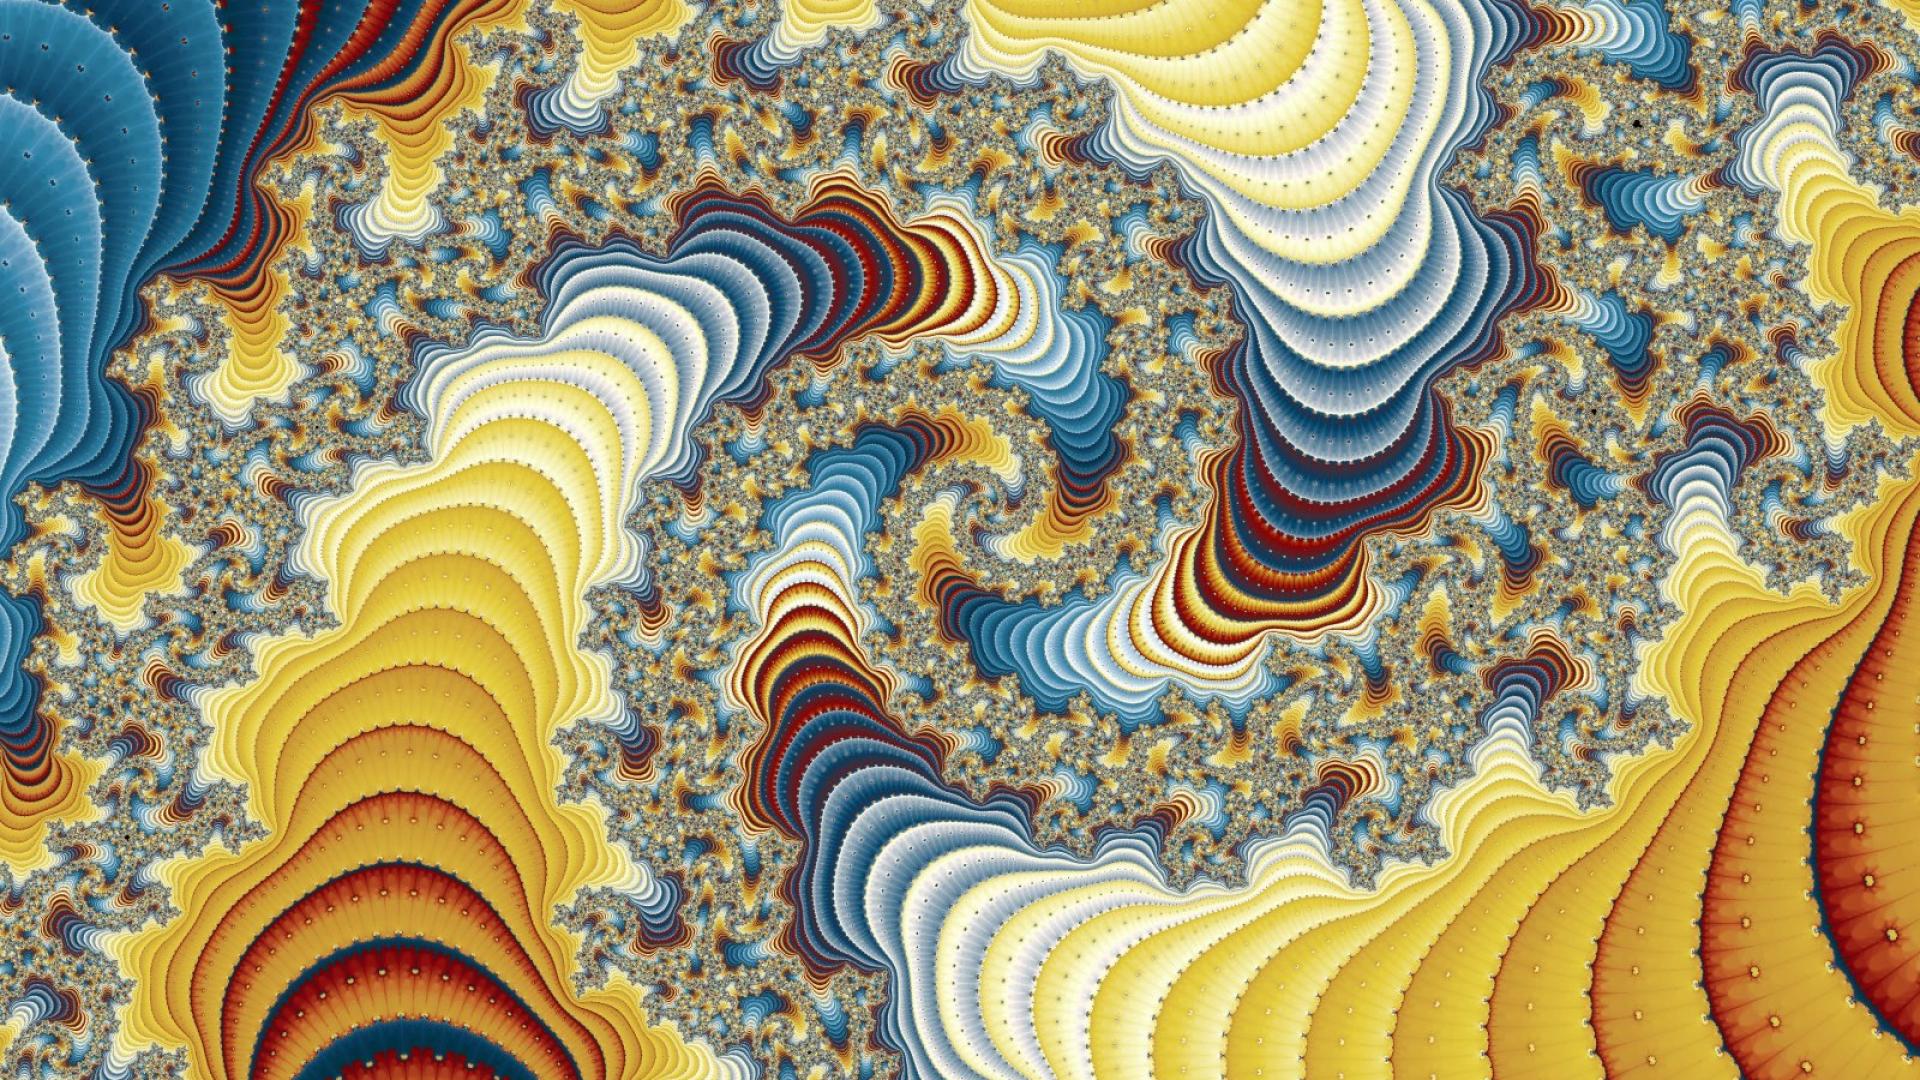 trip fractal hd wallpaper - (#26974) - HQ Desktop Wallpapers ...